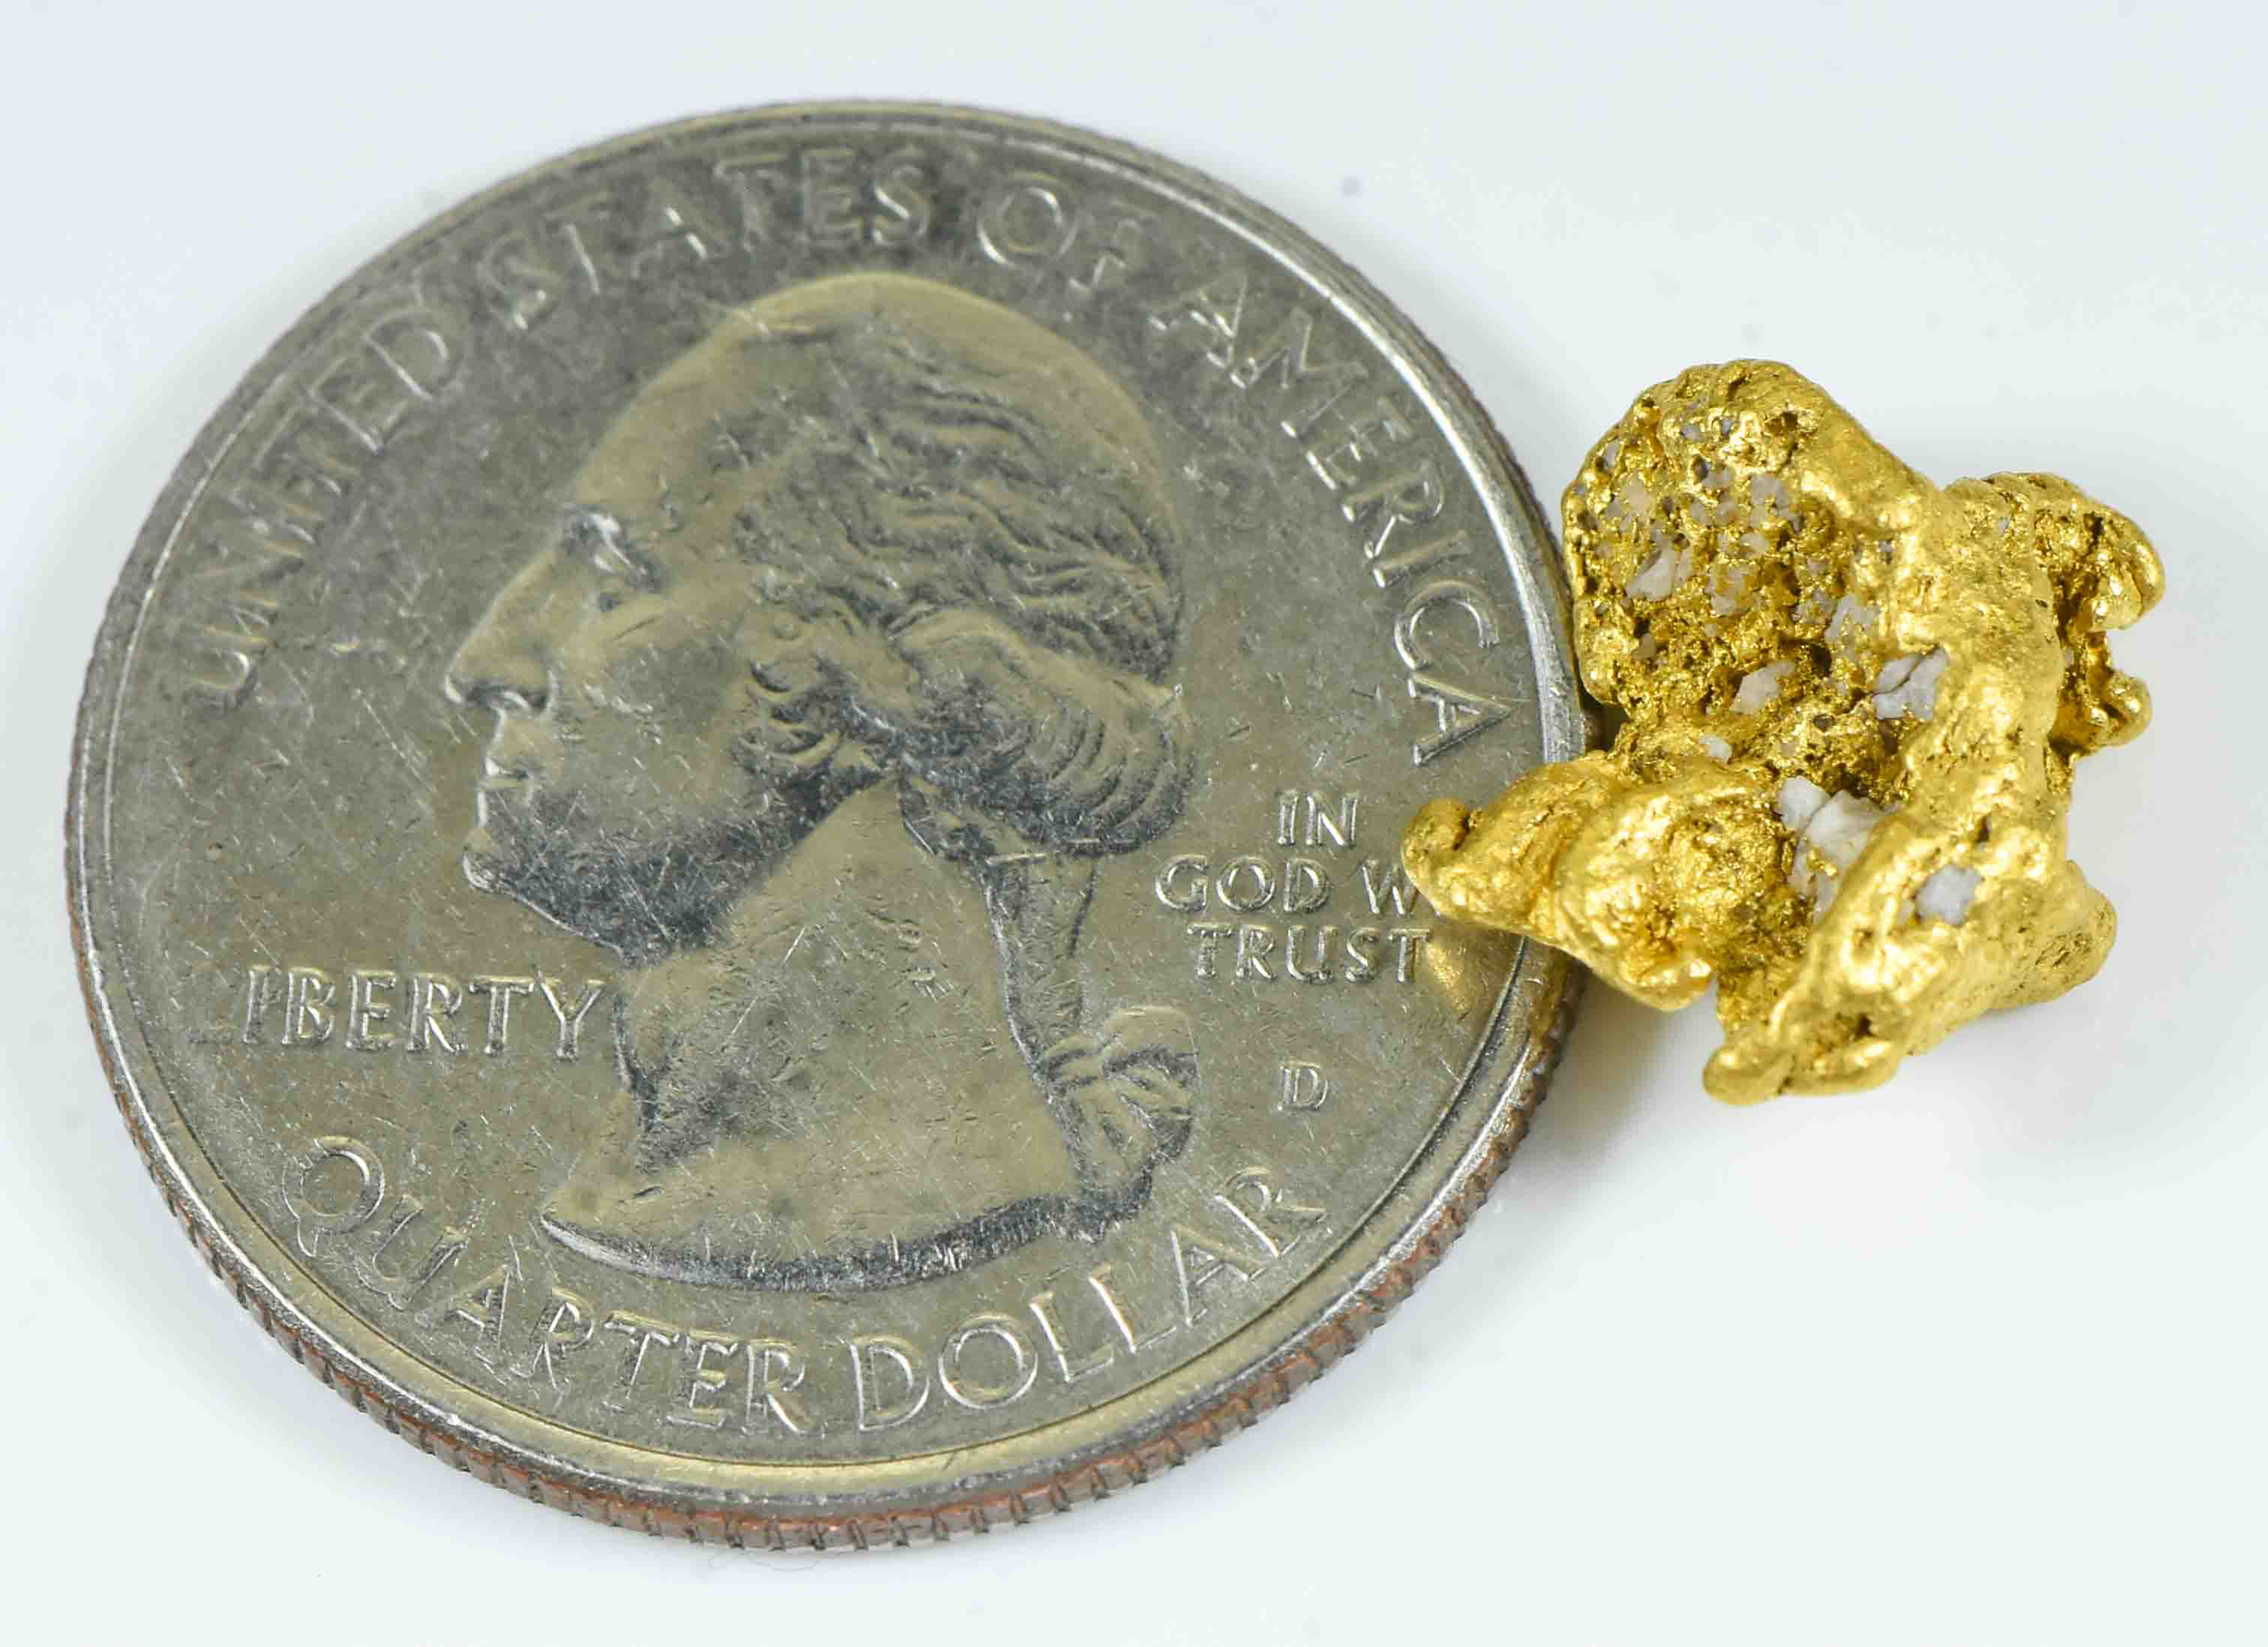 #1046 Natural Gold Nugget Australian 2.92 Grams Genuine